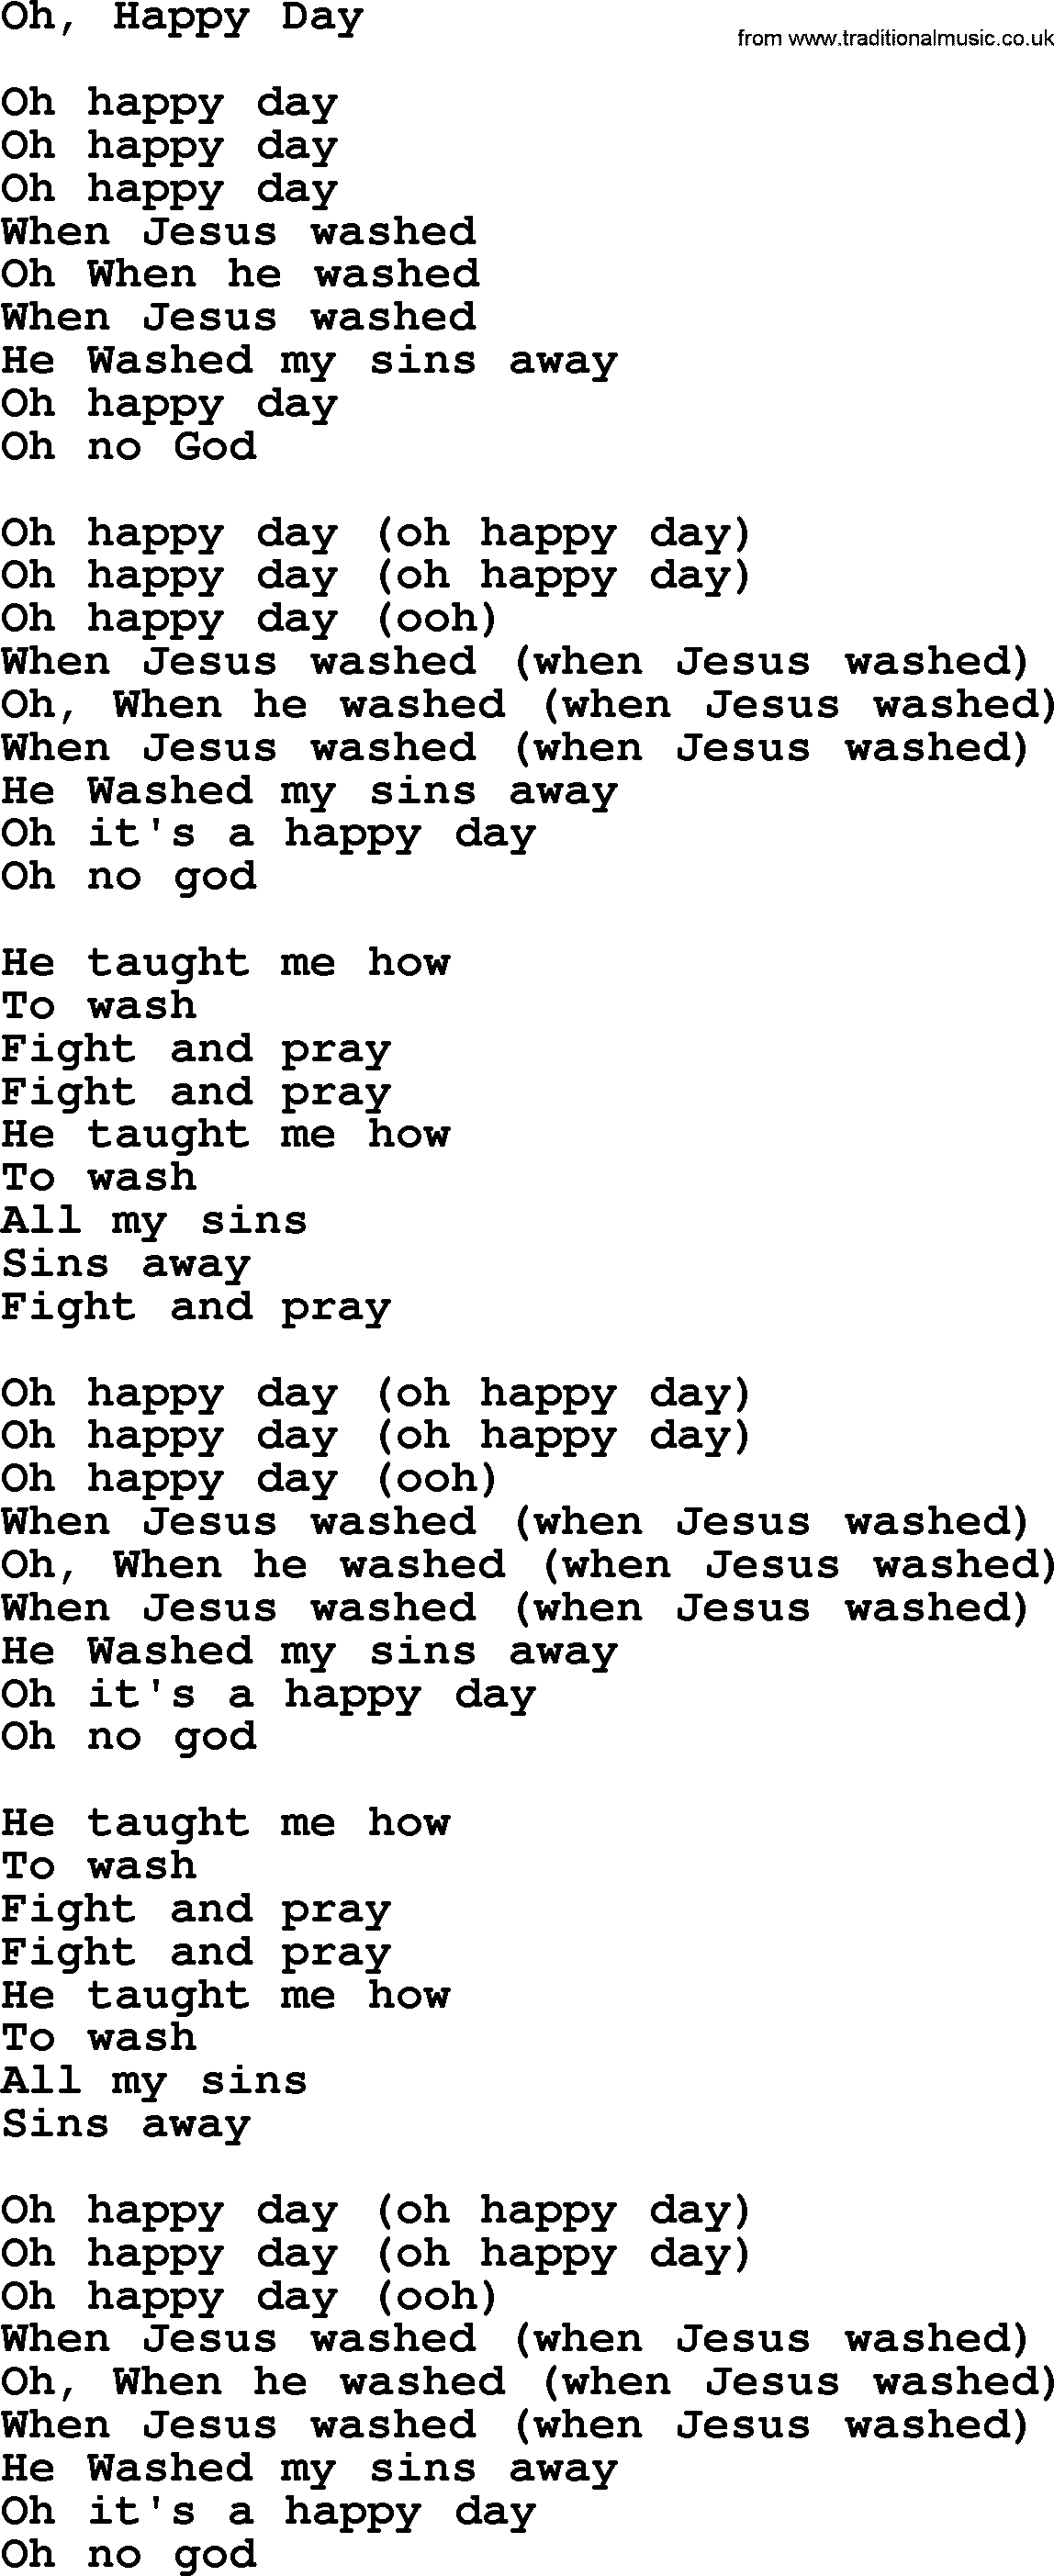 Joan Baez song Oh, Happy Day, lyrics